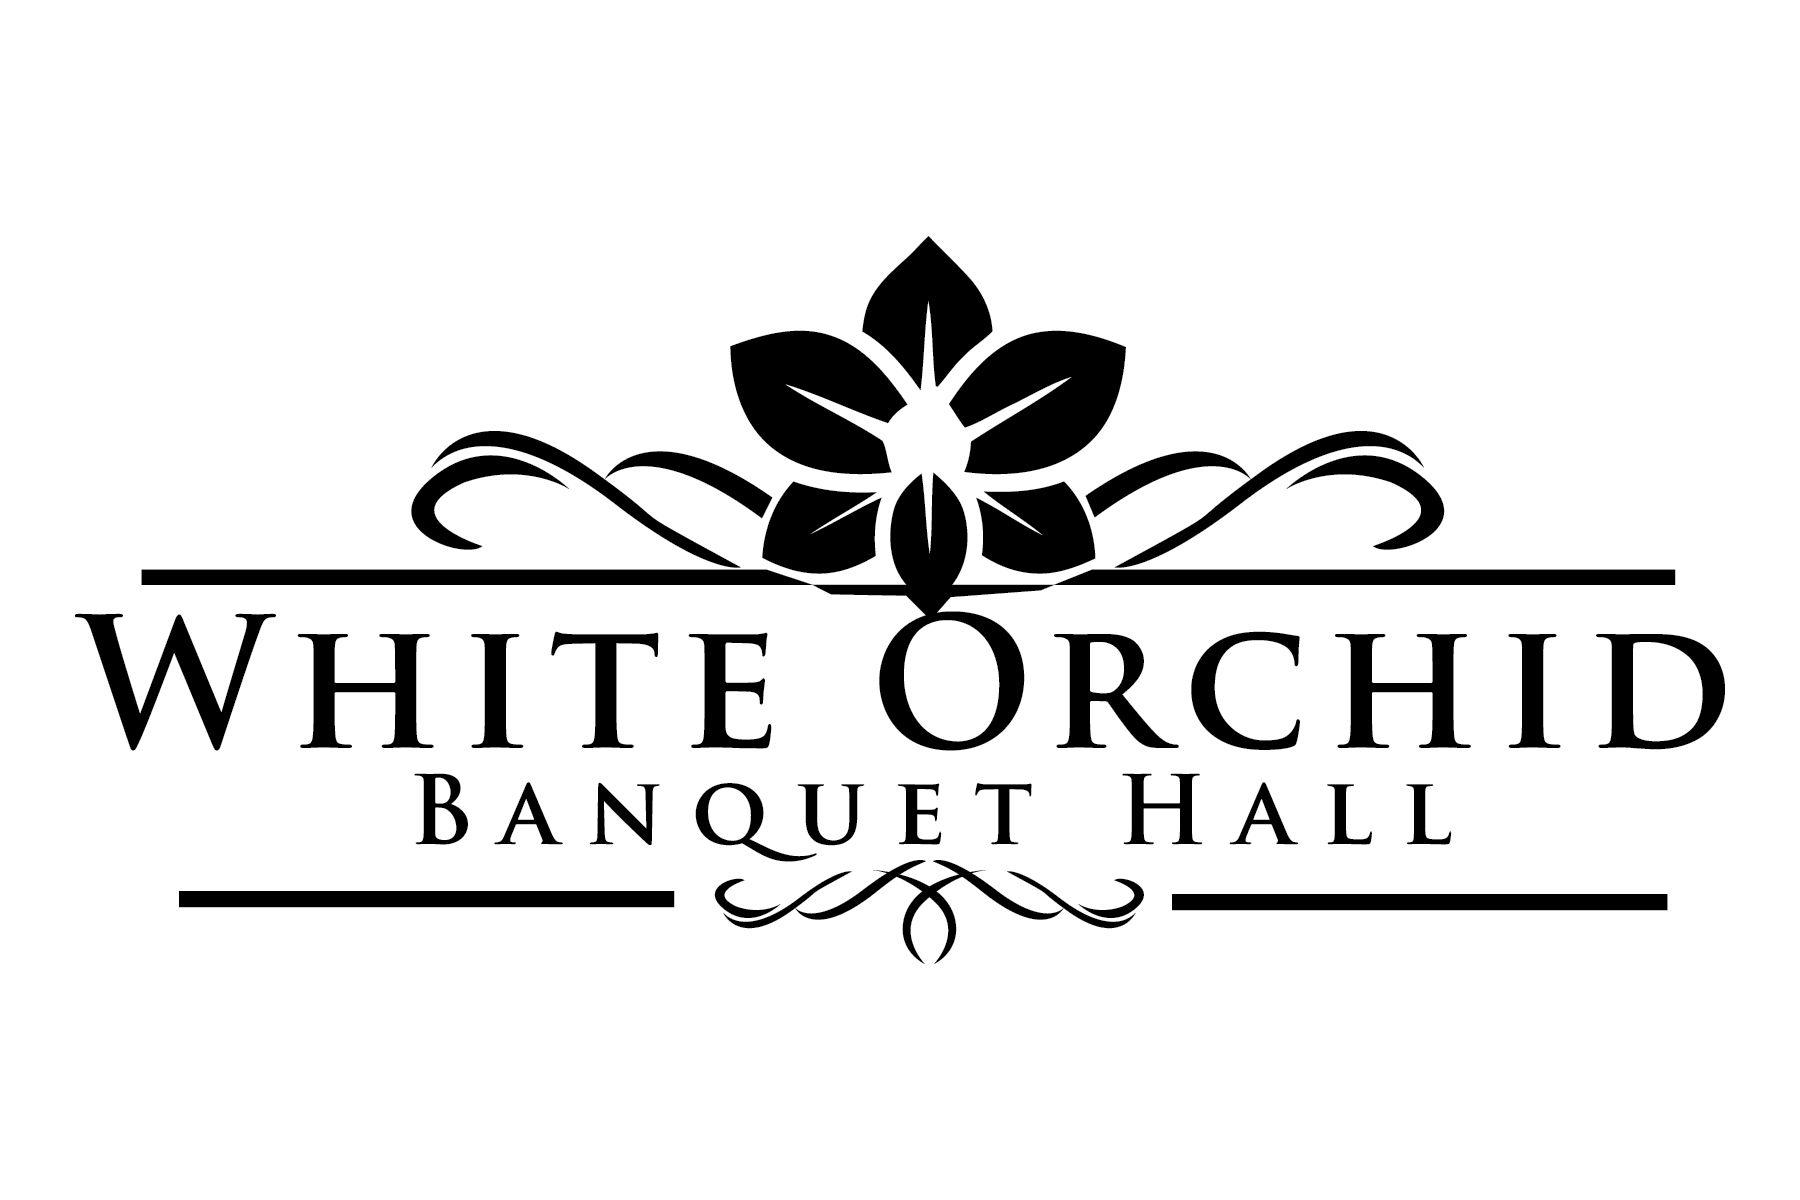 Hall Logo - Punjabi American Media Orchid Banquet Hall Logo